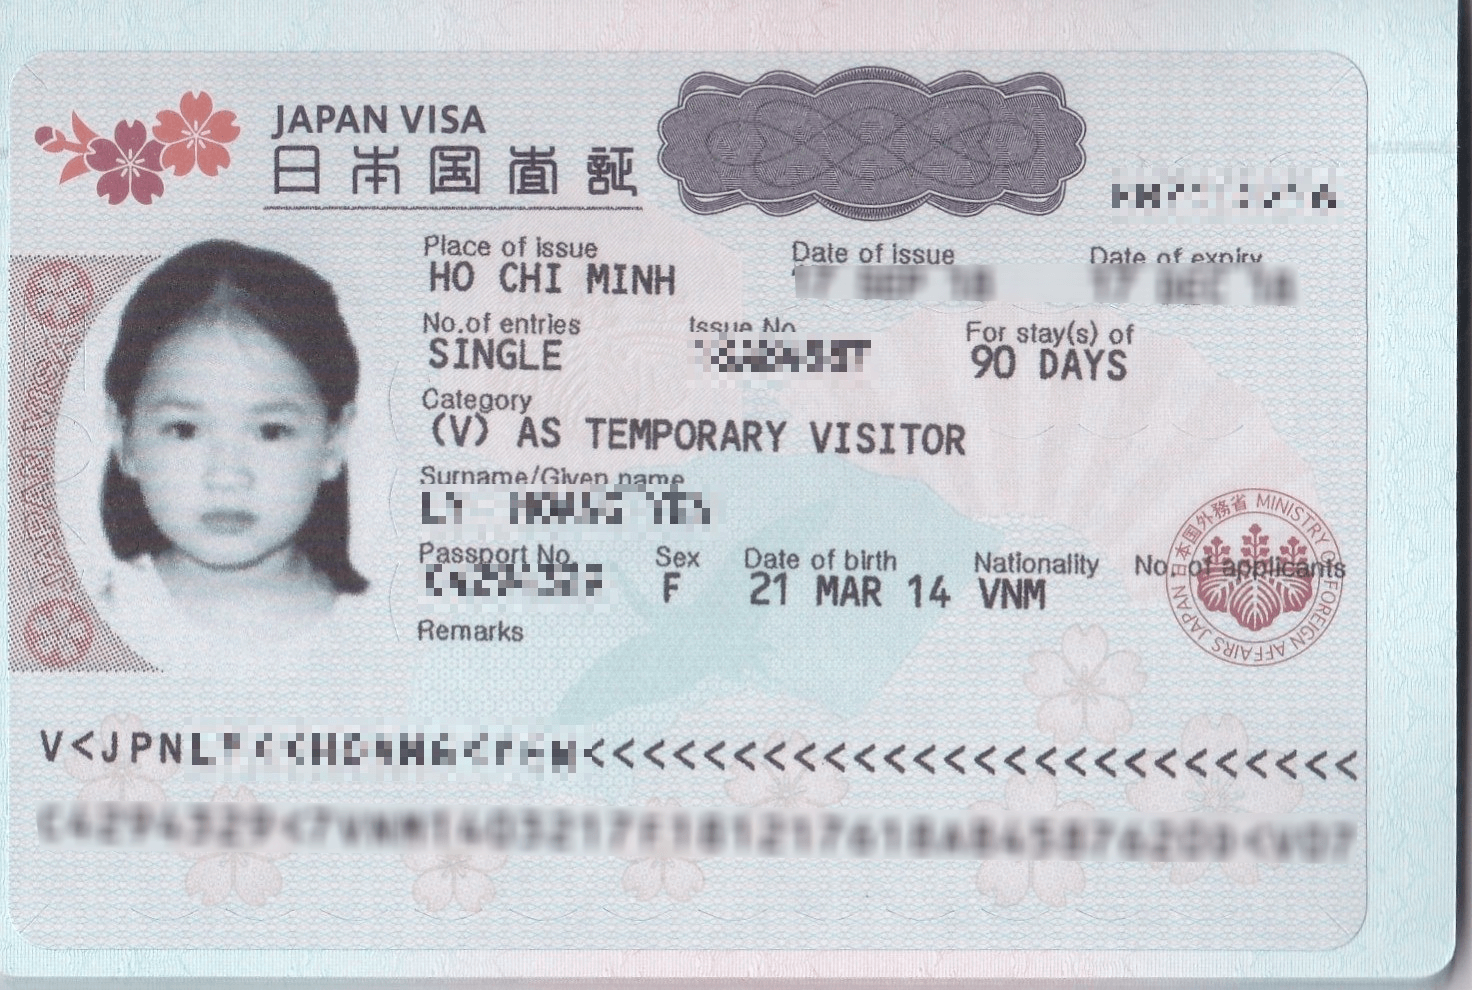 Visa du lịch Nhật